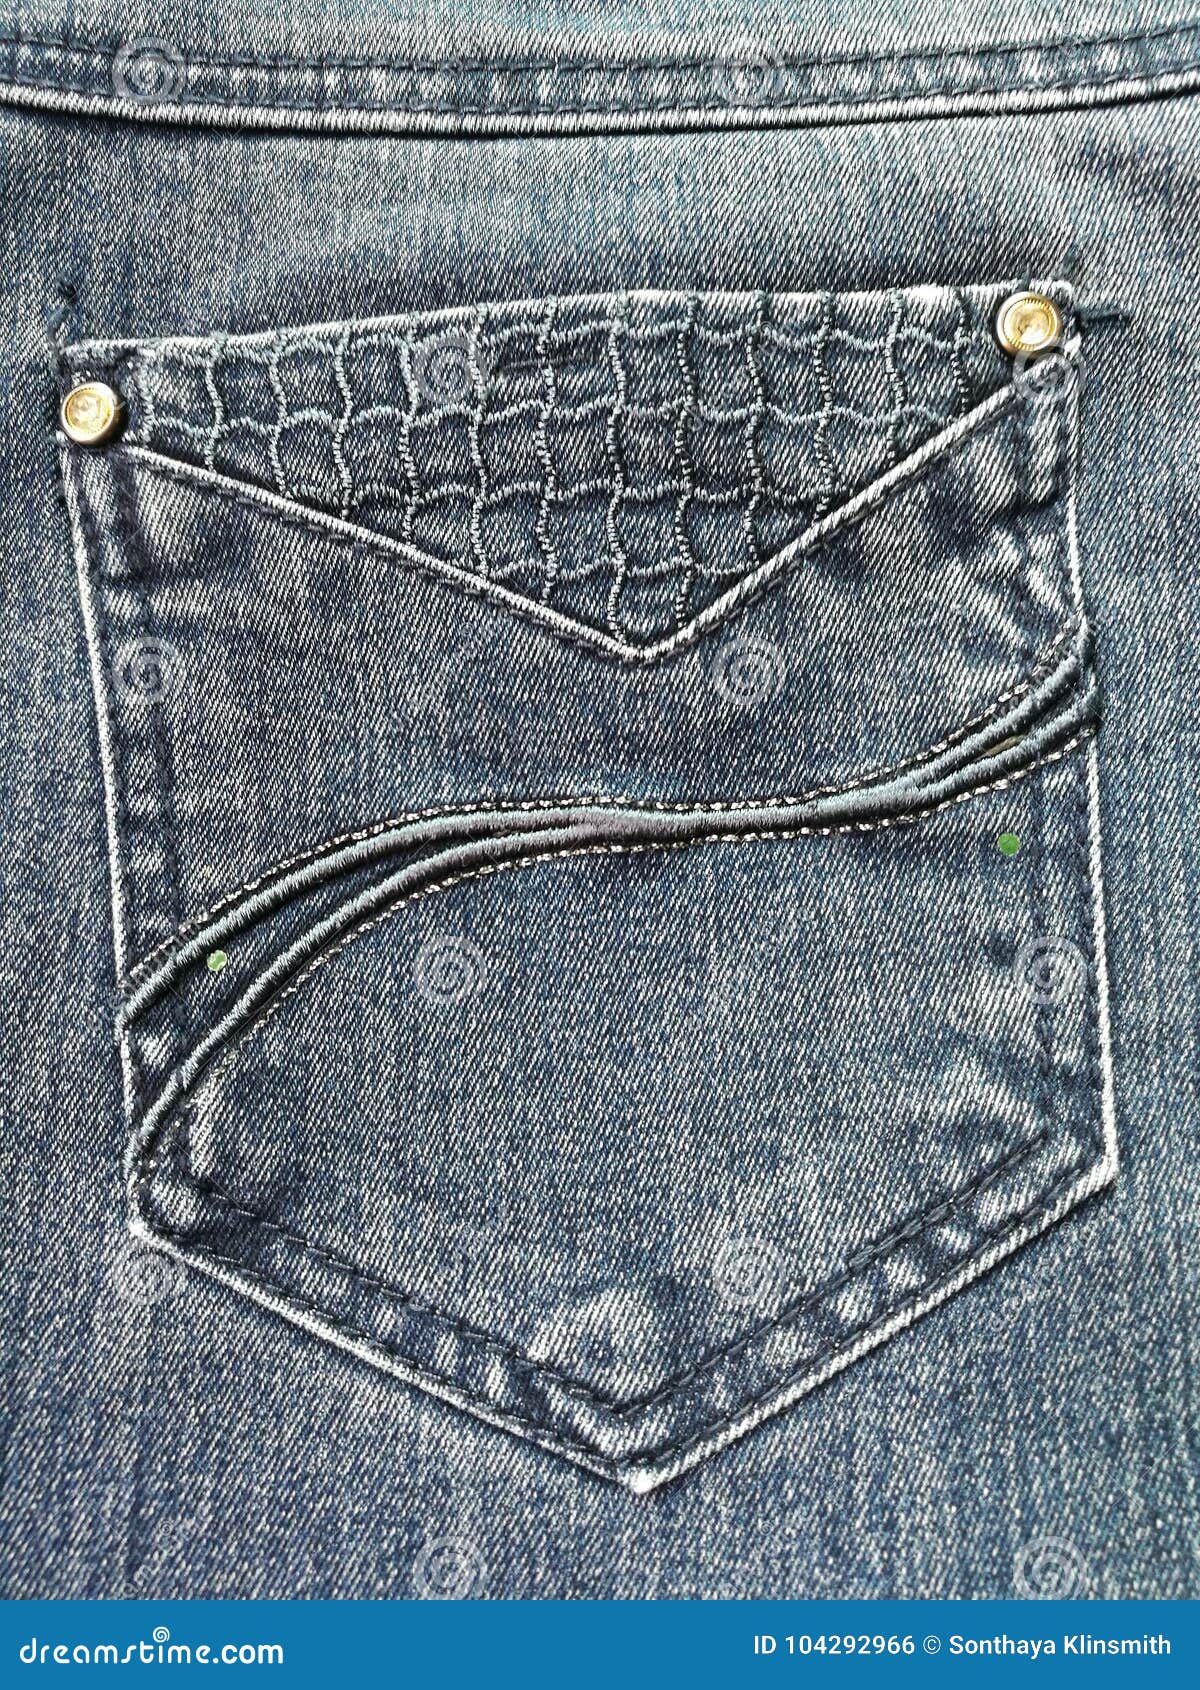 Vintage Lee Men's Mid Rise Straight Jeans Mod. Knox Flops Size W30 L34  Distressed Denim - Etsy